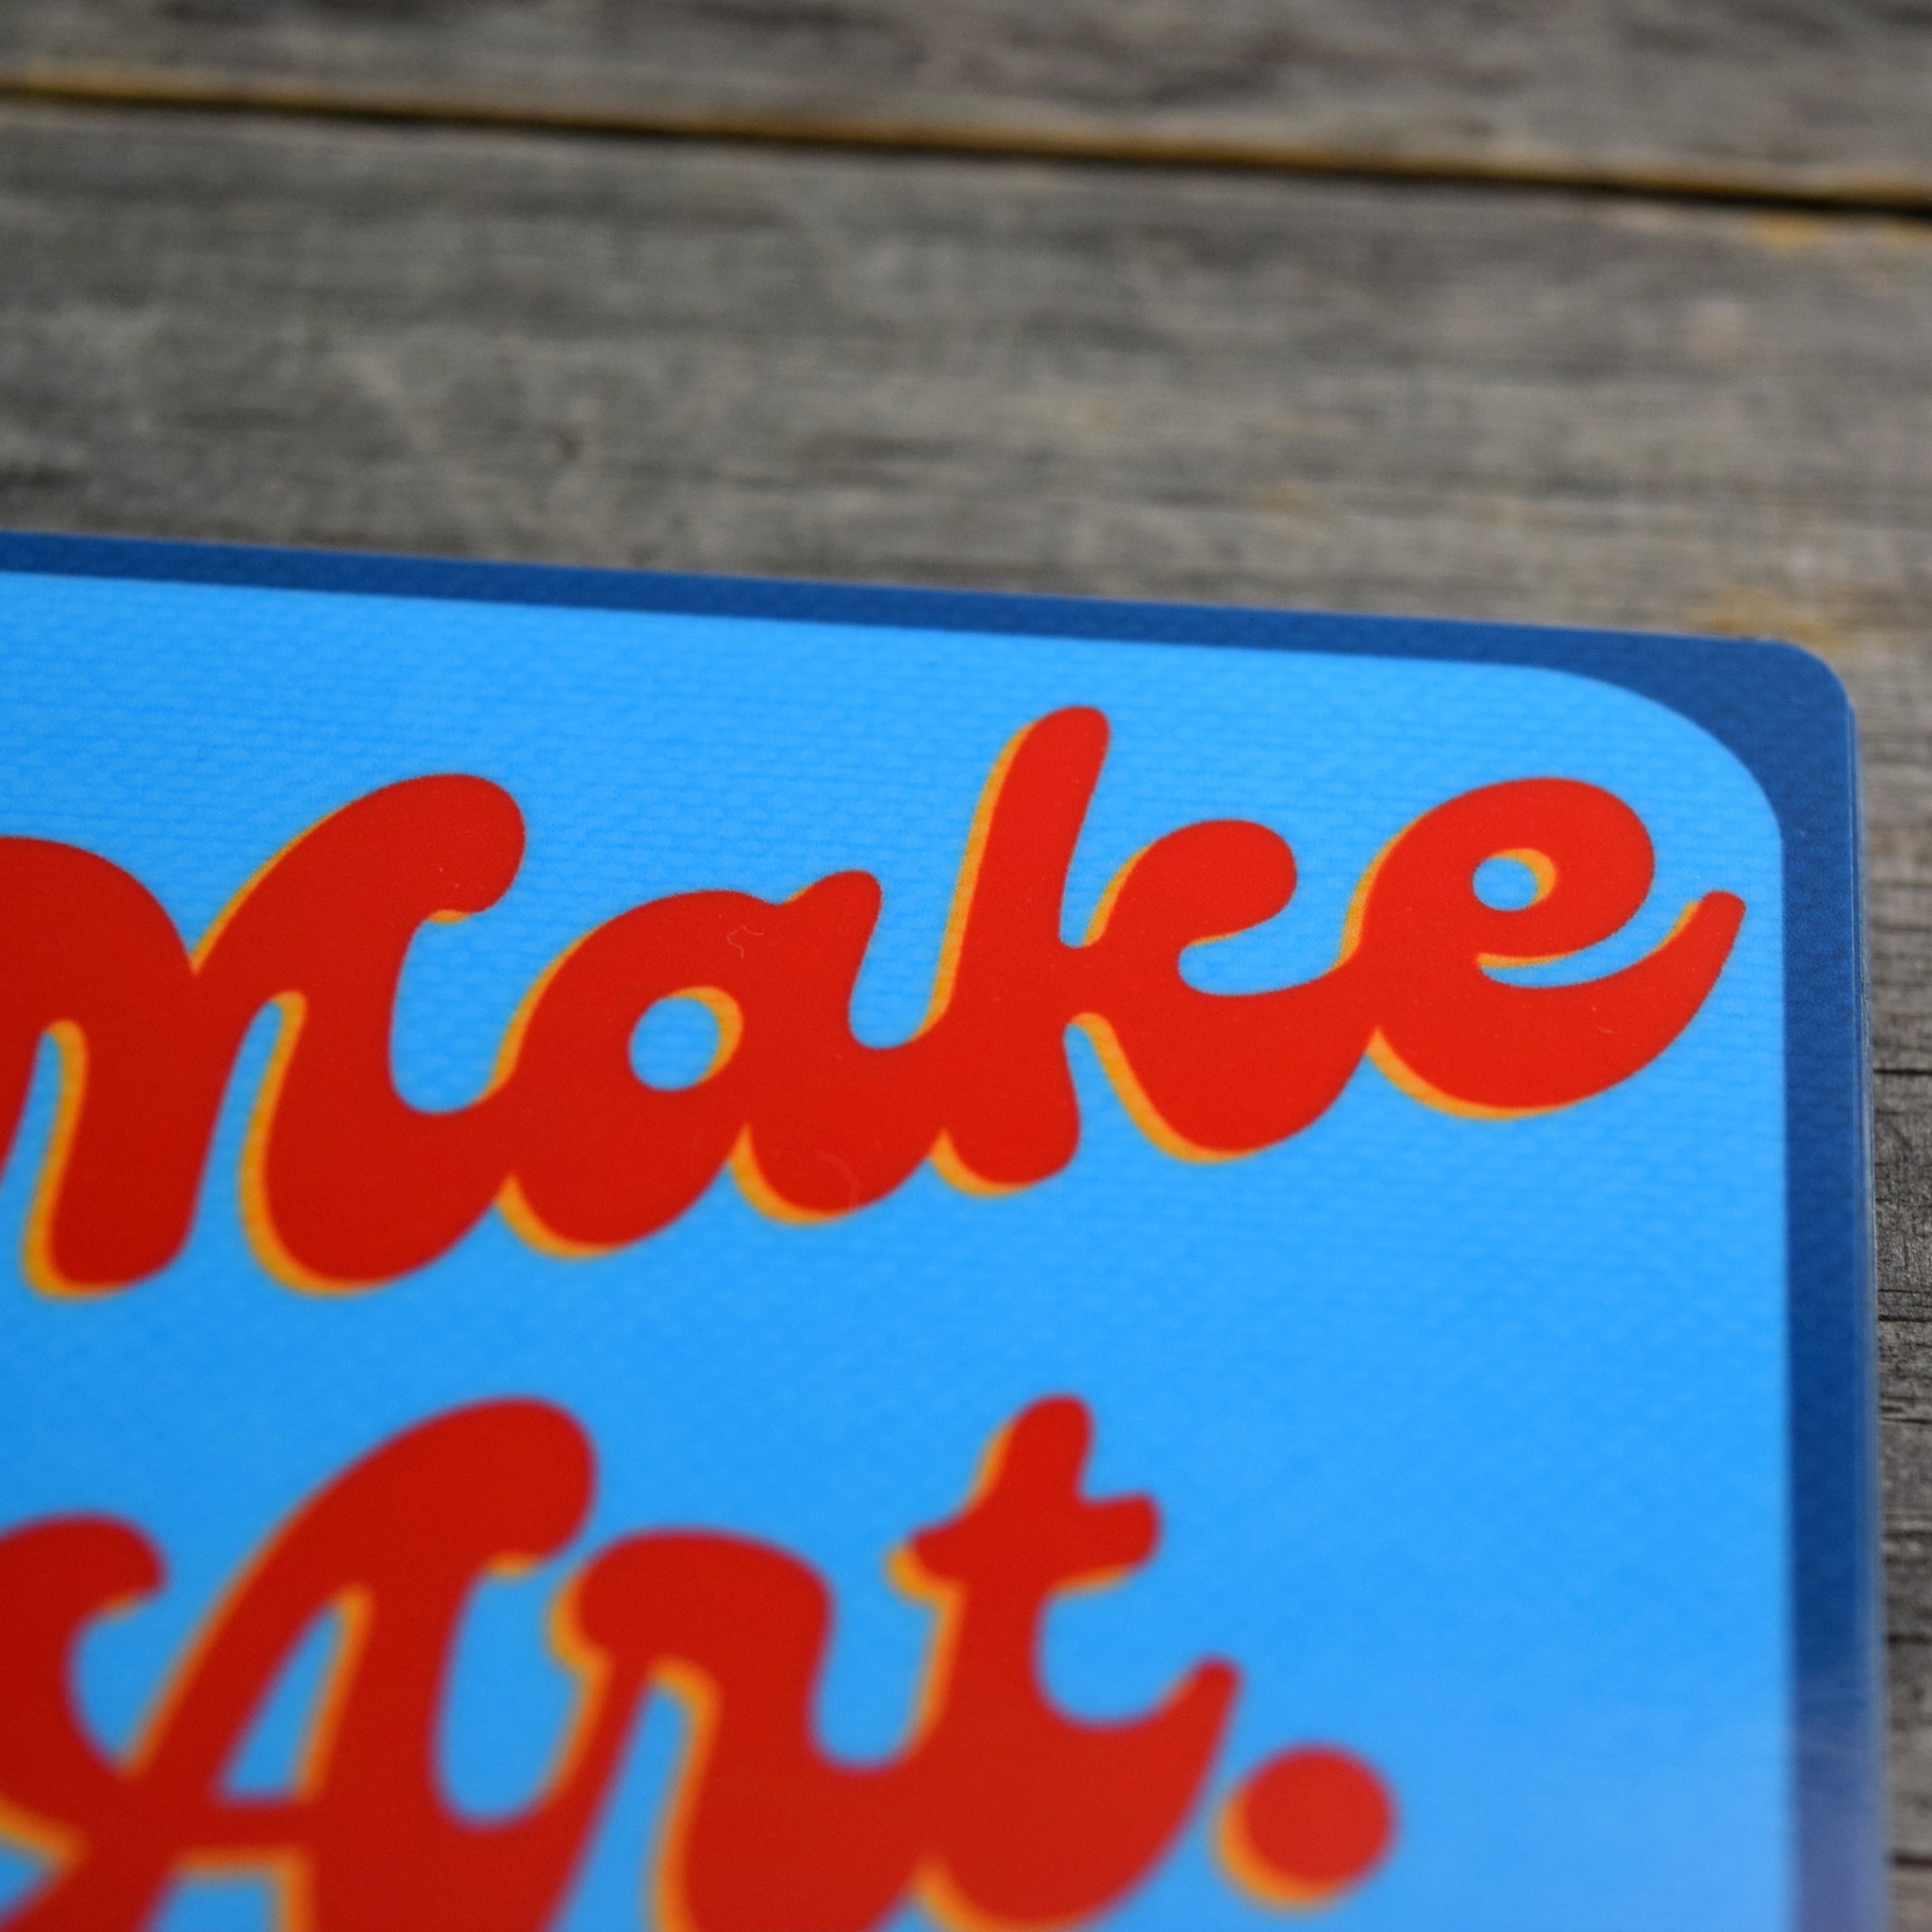 Make Art. Groovy Text Vinyl Sticker